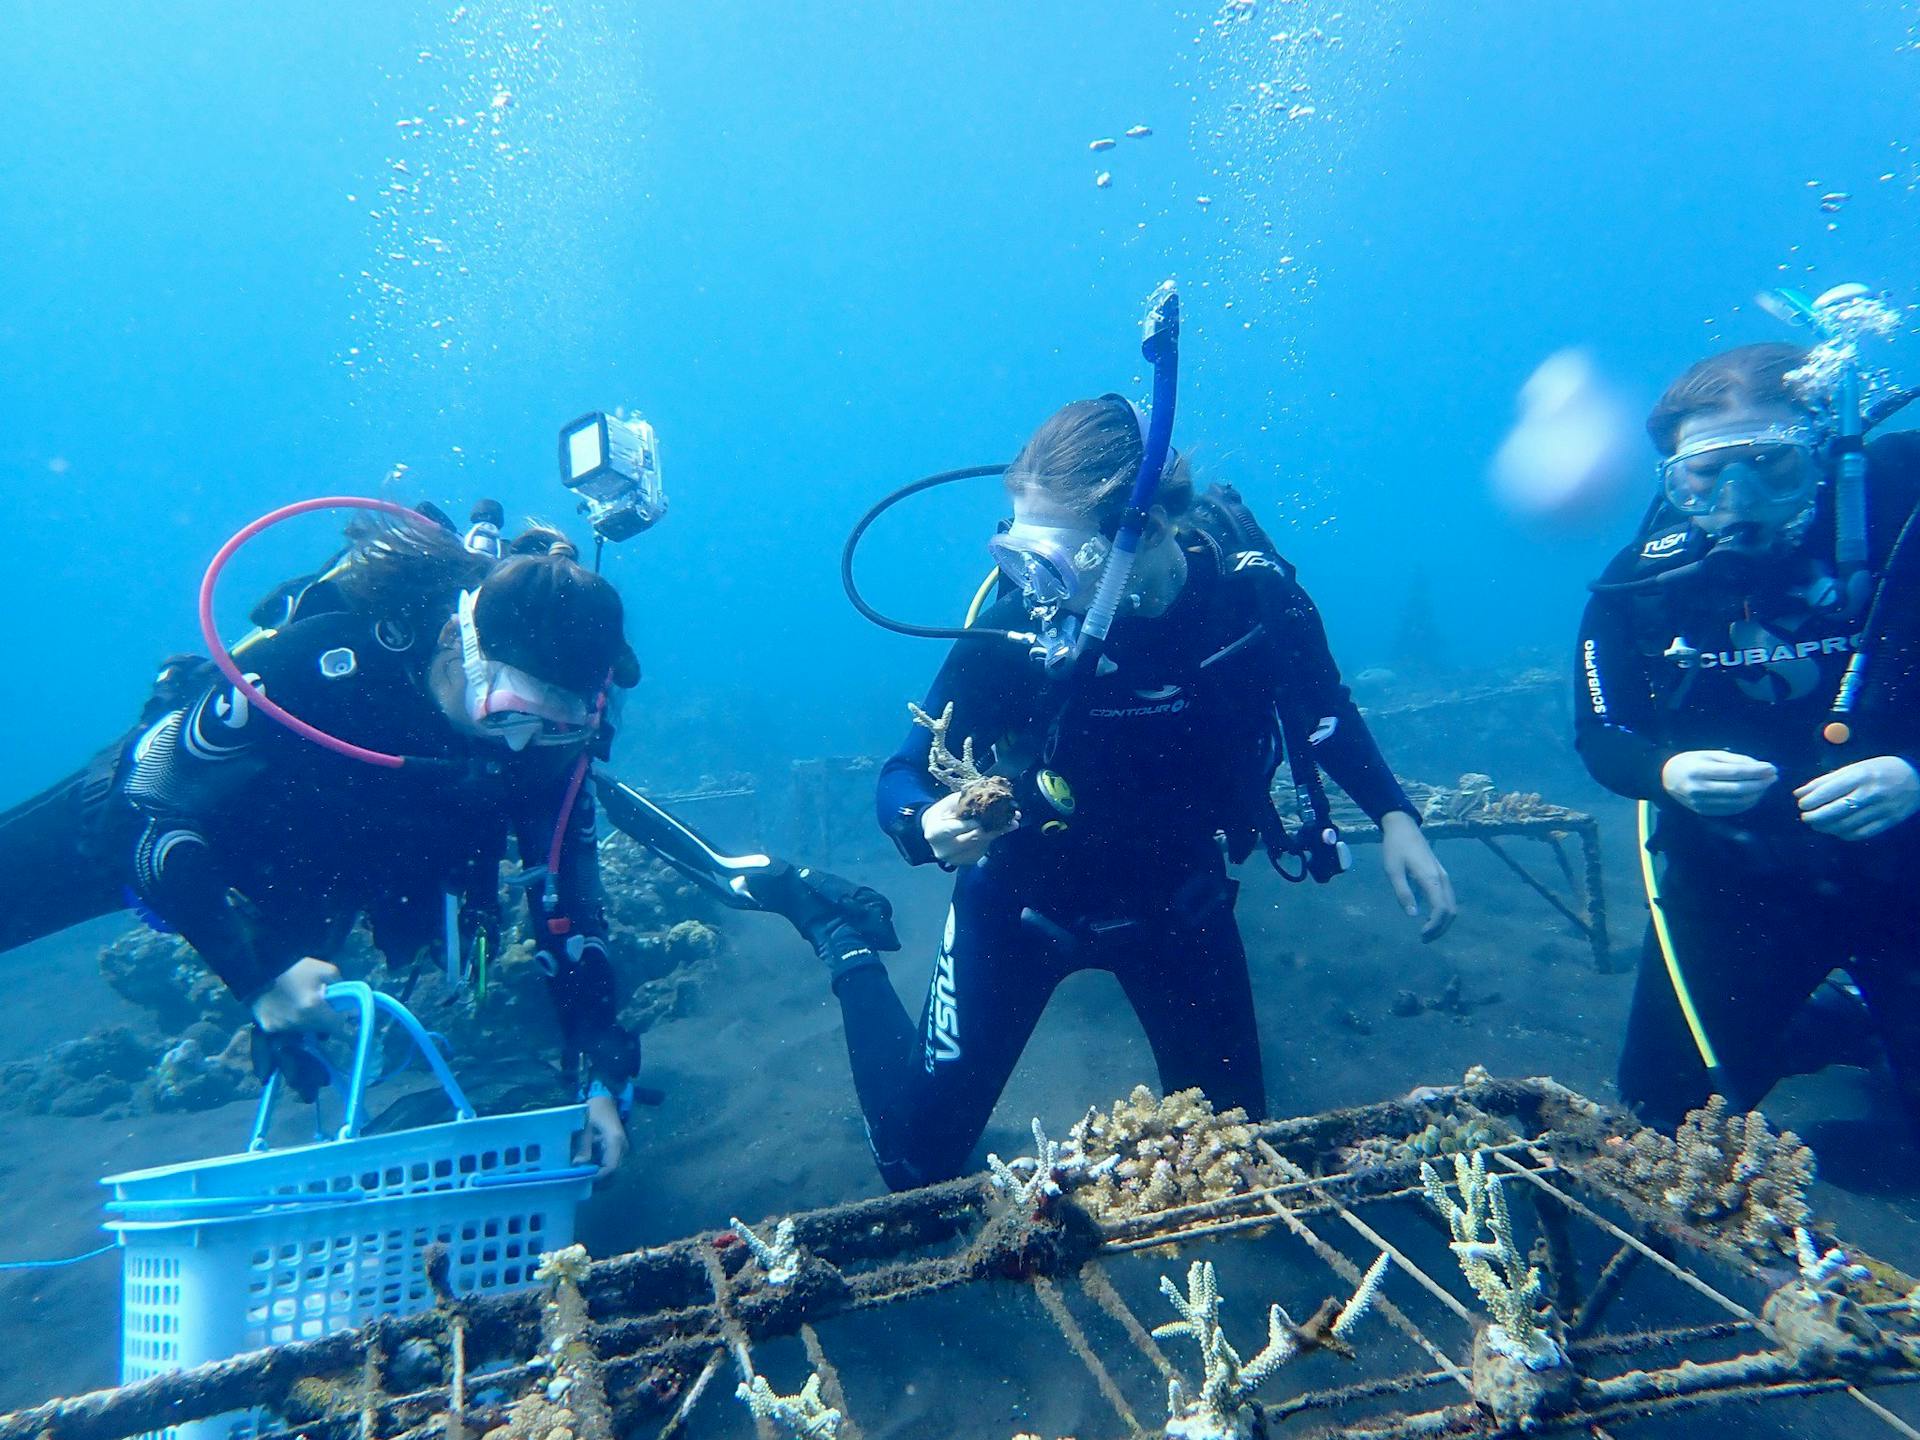 Students in scuba gear diving in ocean to rebuild coral reefs